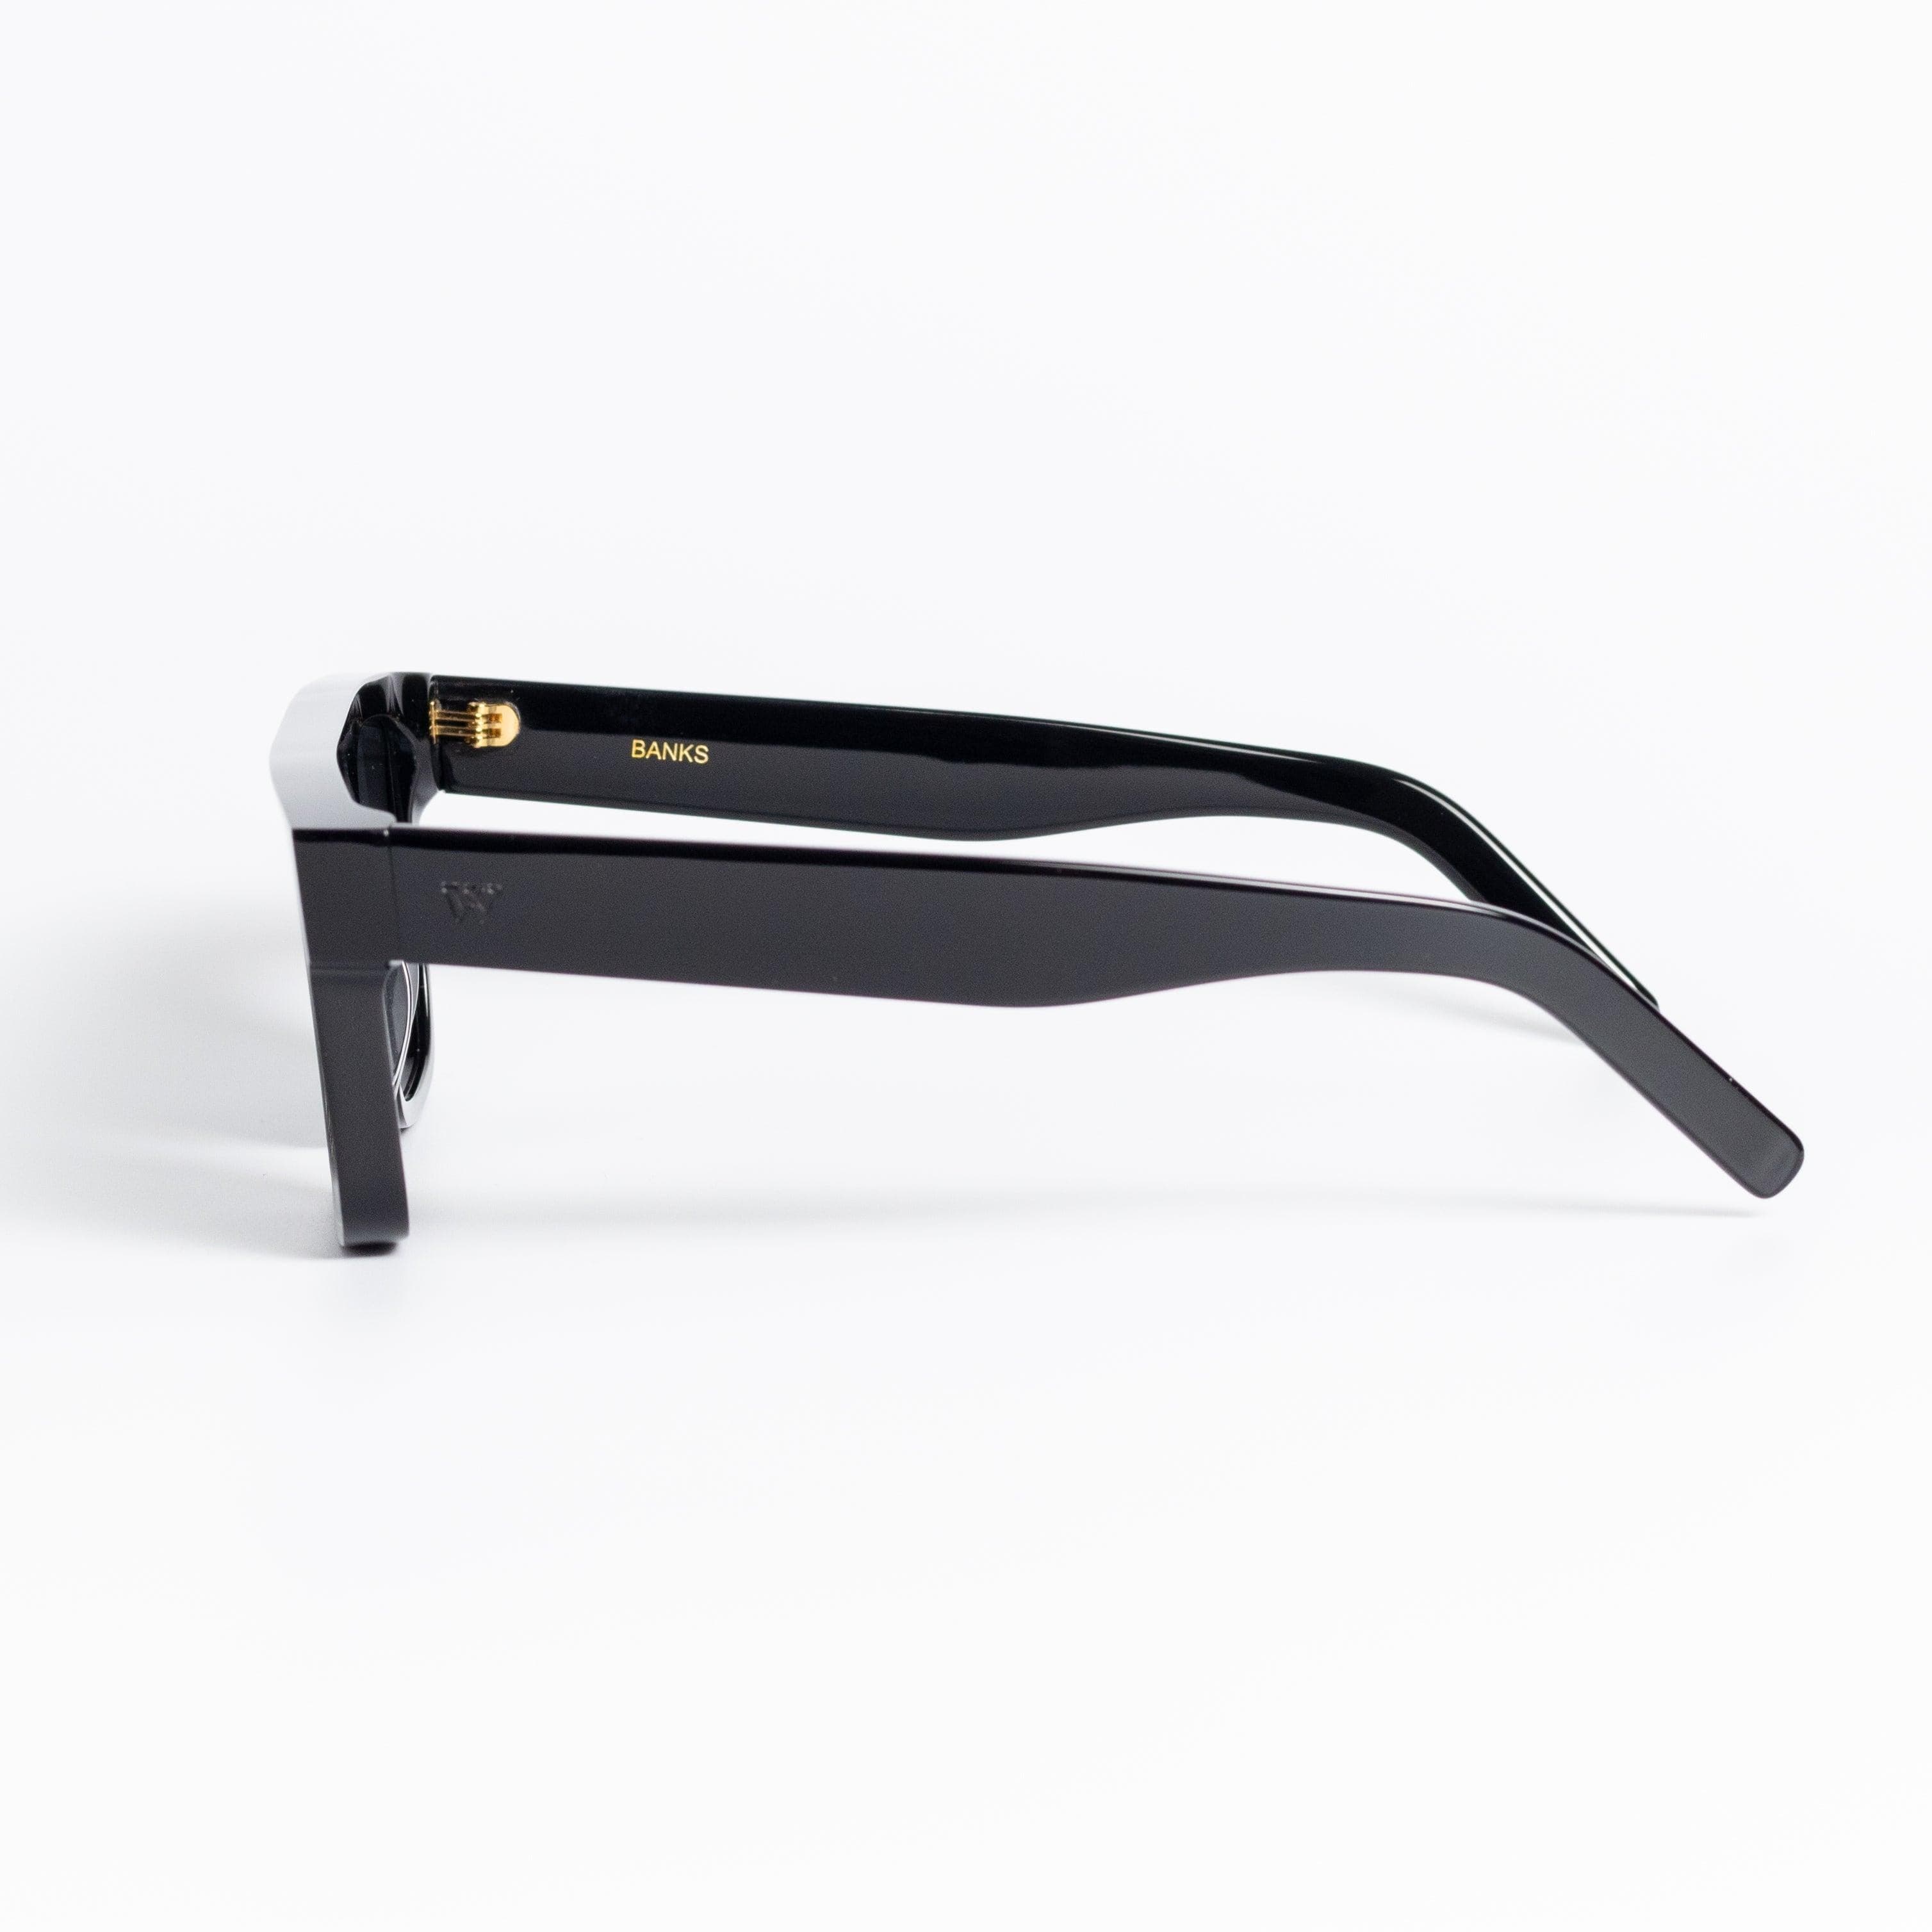 Walter Hill Sunglasses Oversized / Black / Polarized Cat.3 BANKS - Black